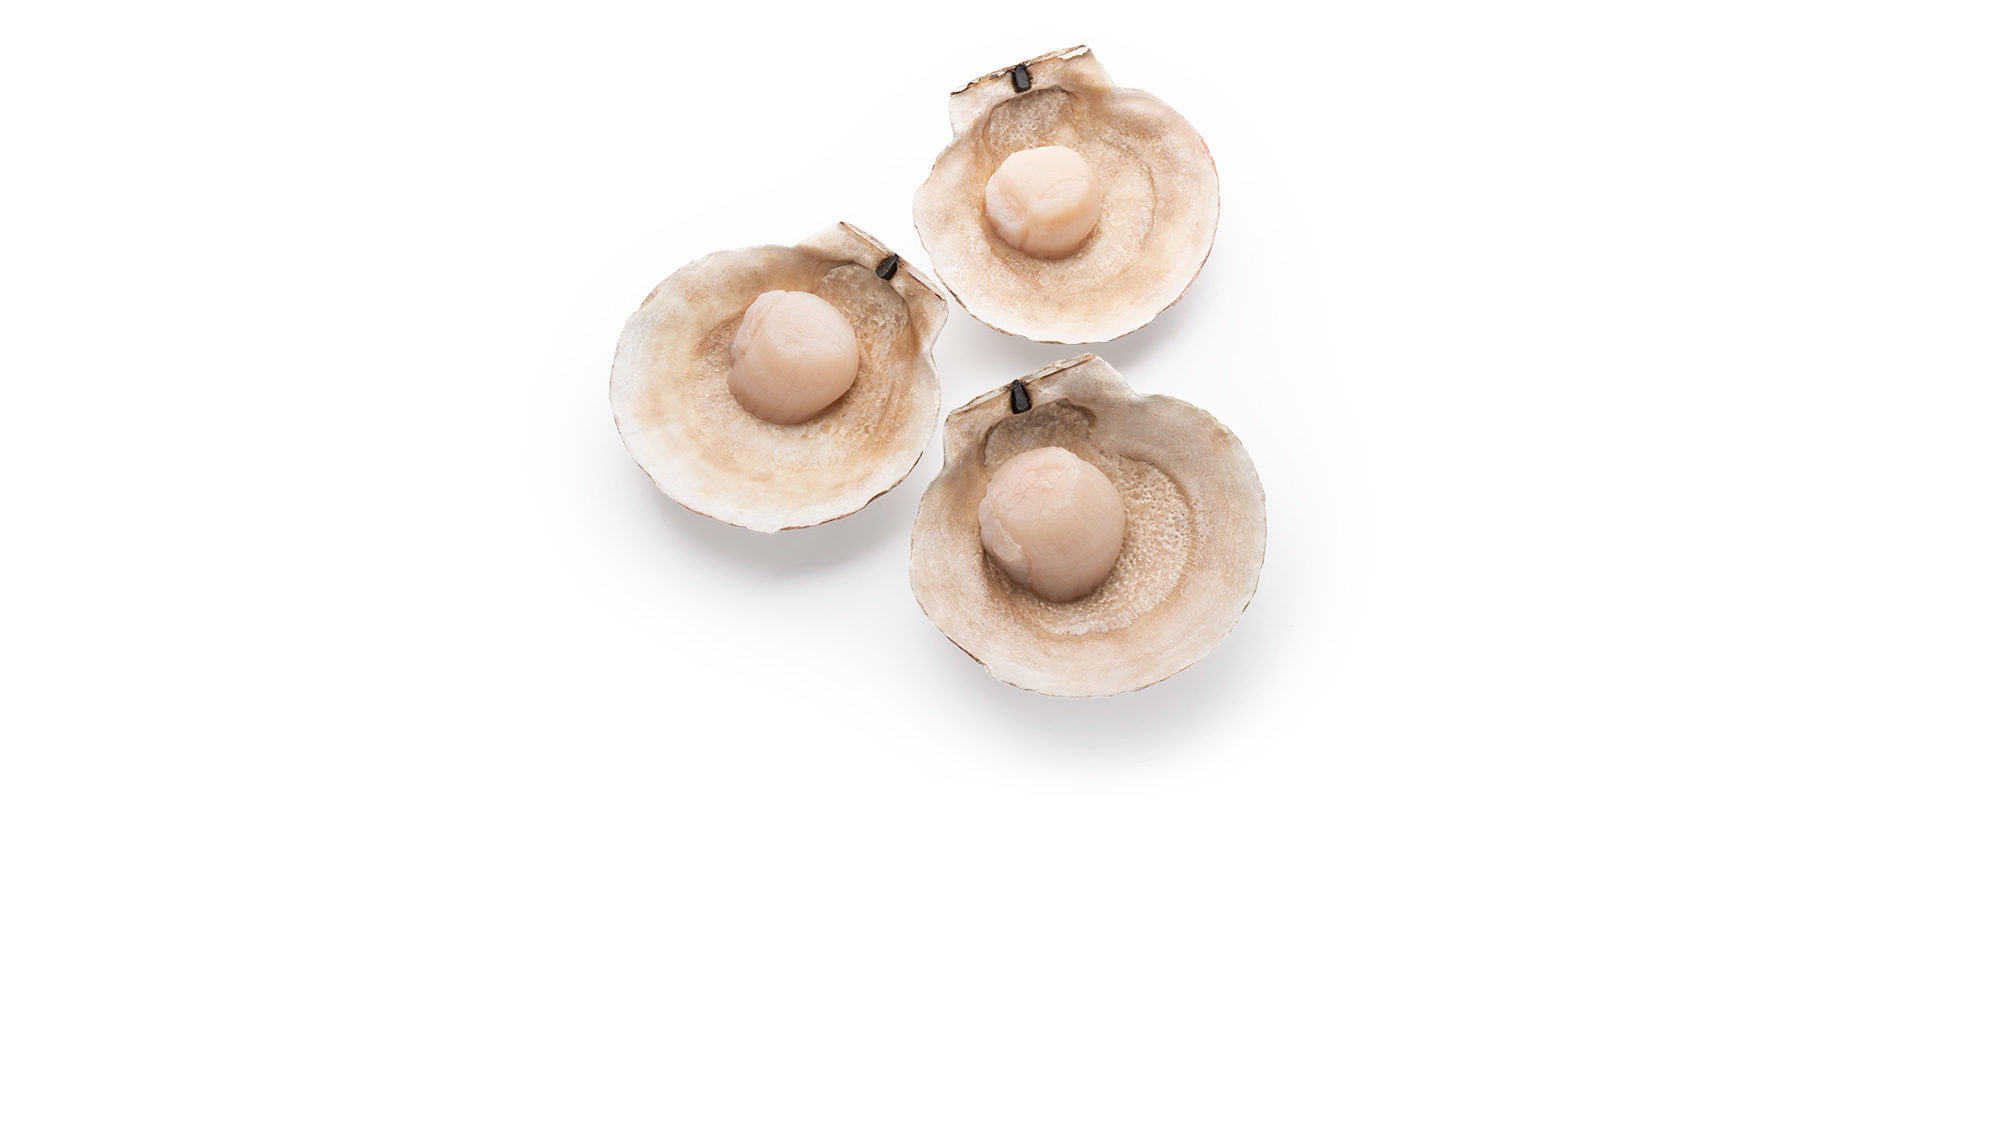 Raw scallops in shell